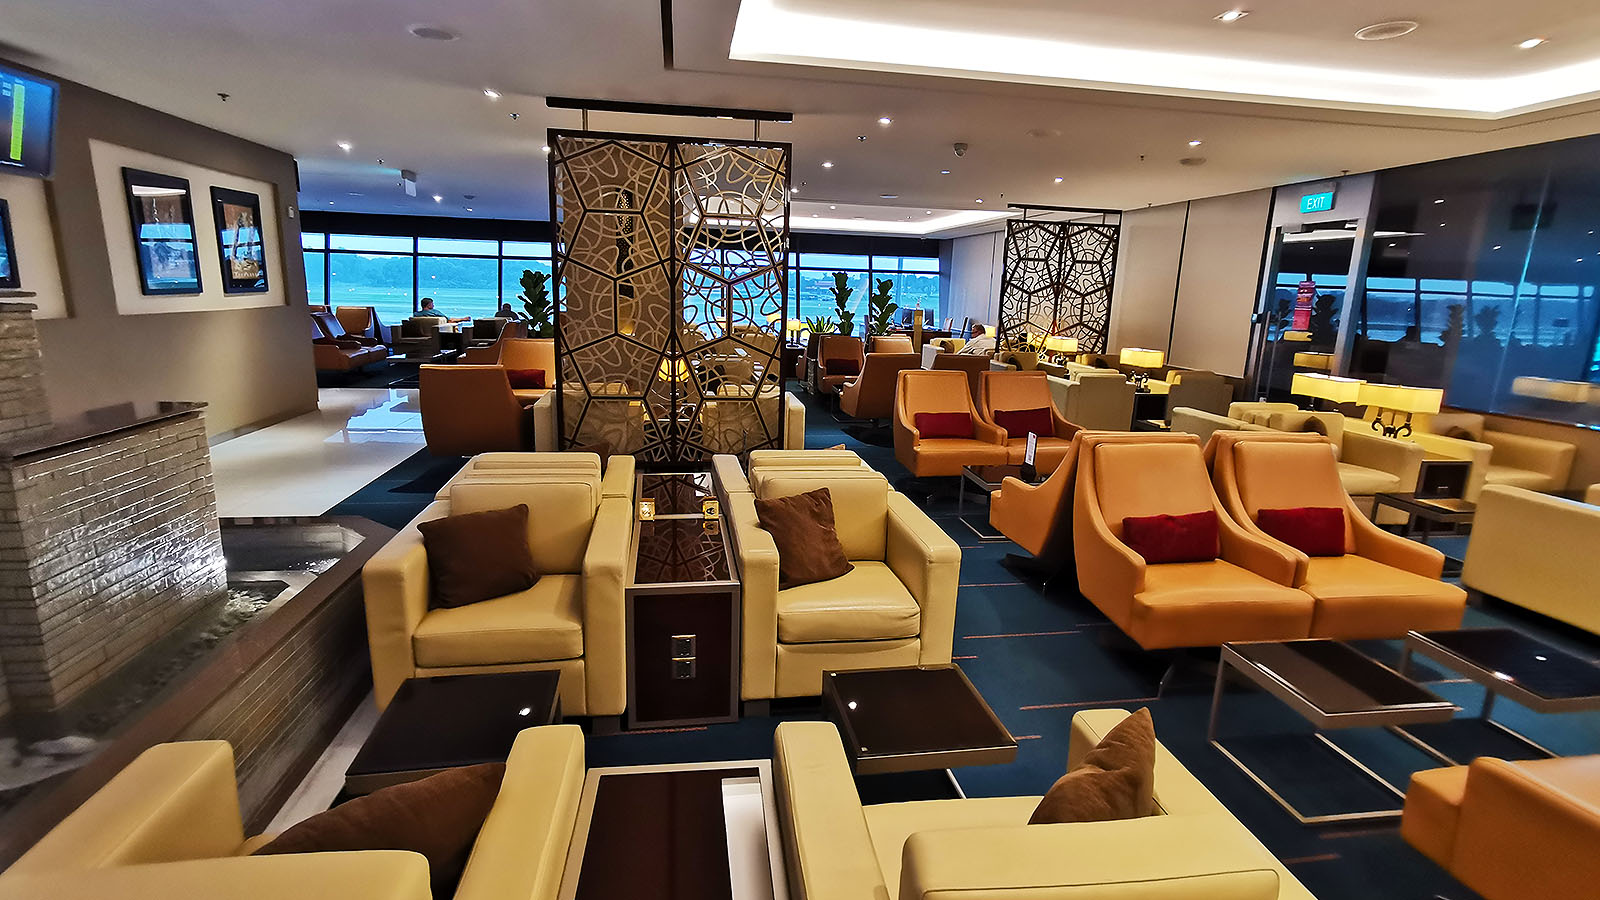 Seating at the Emirates Lounge, Singapore